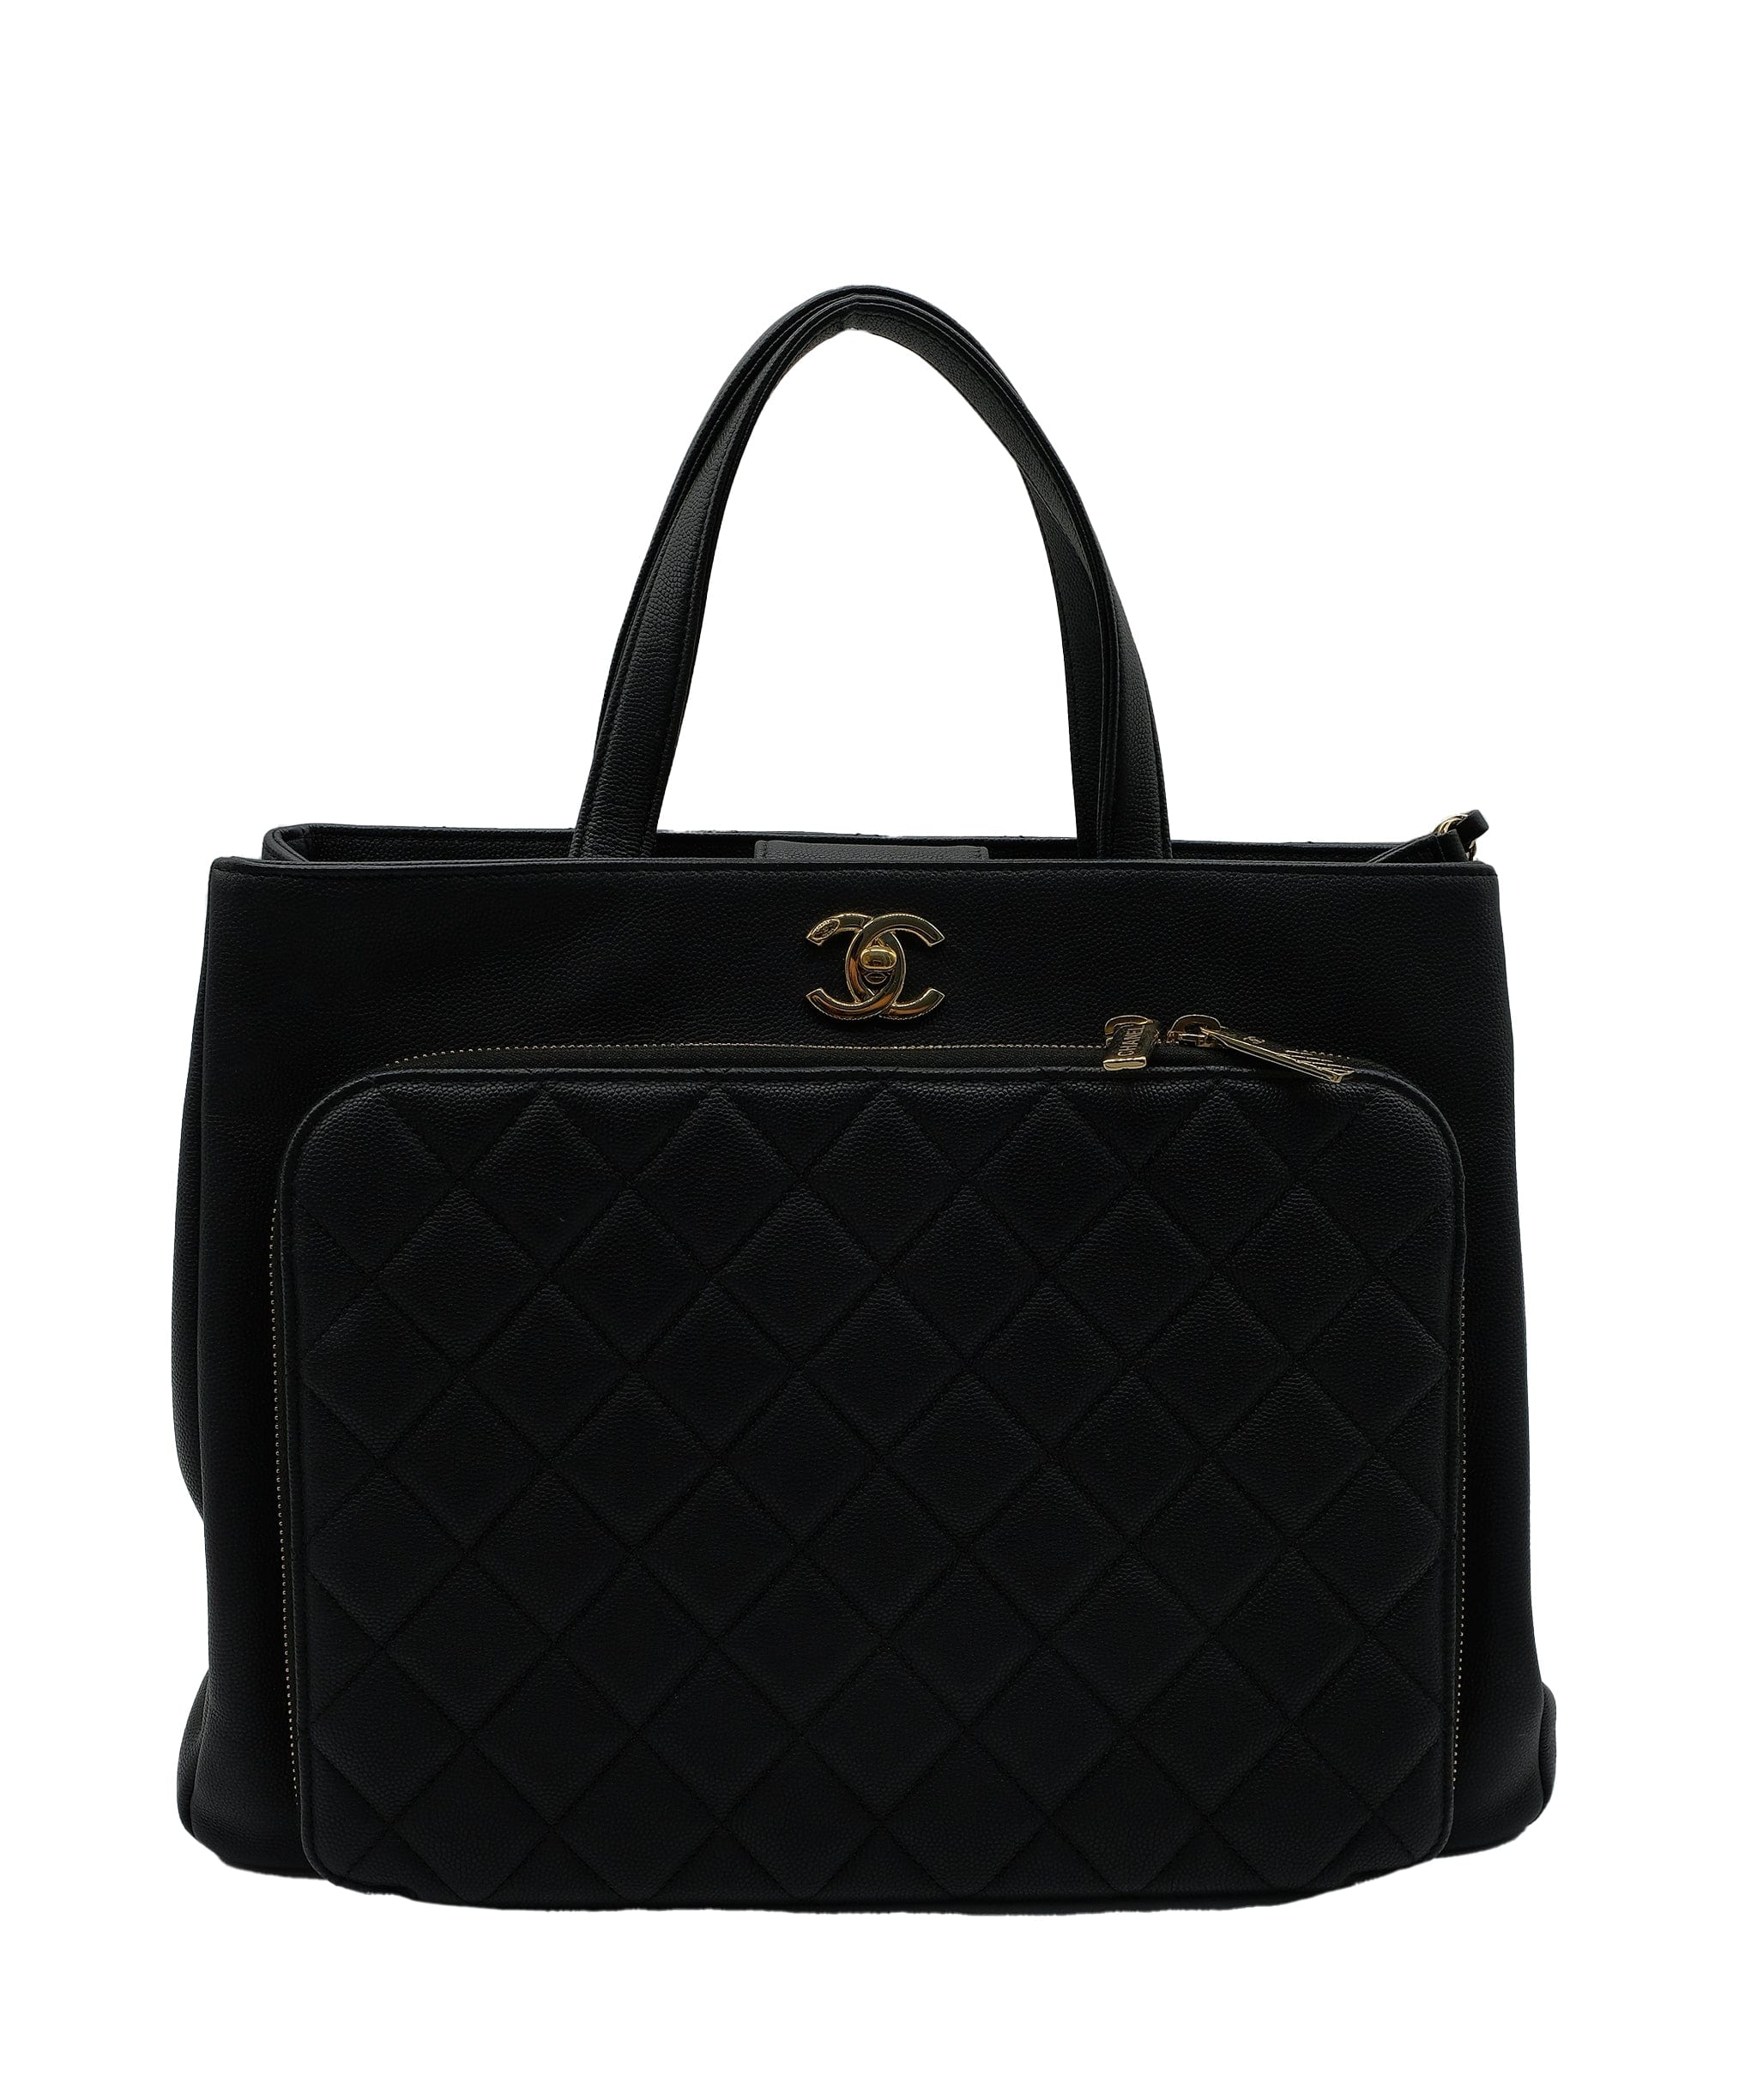 Chanel Chanel Caviar Business bag